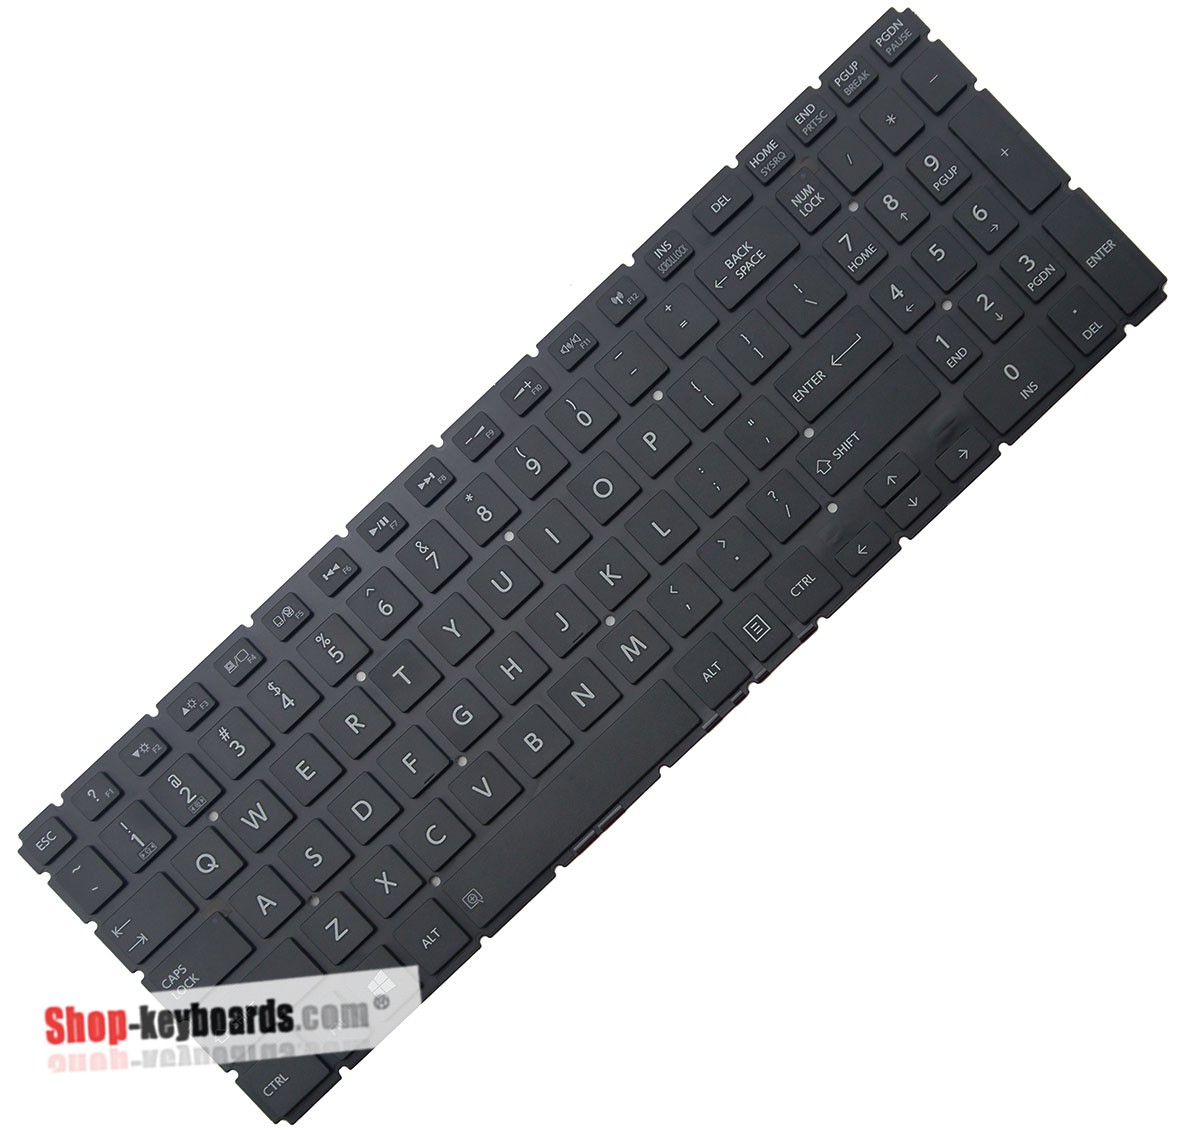 Toshiba AEBLYF01010 Keyboard replacement